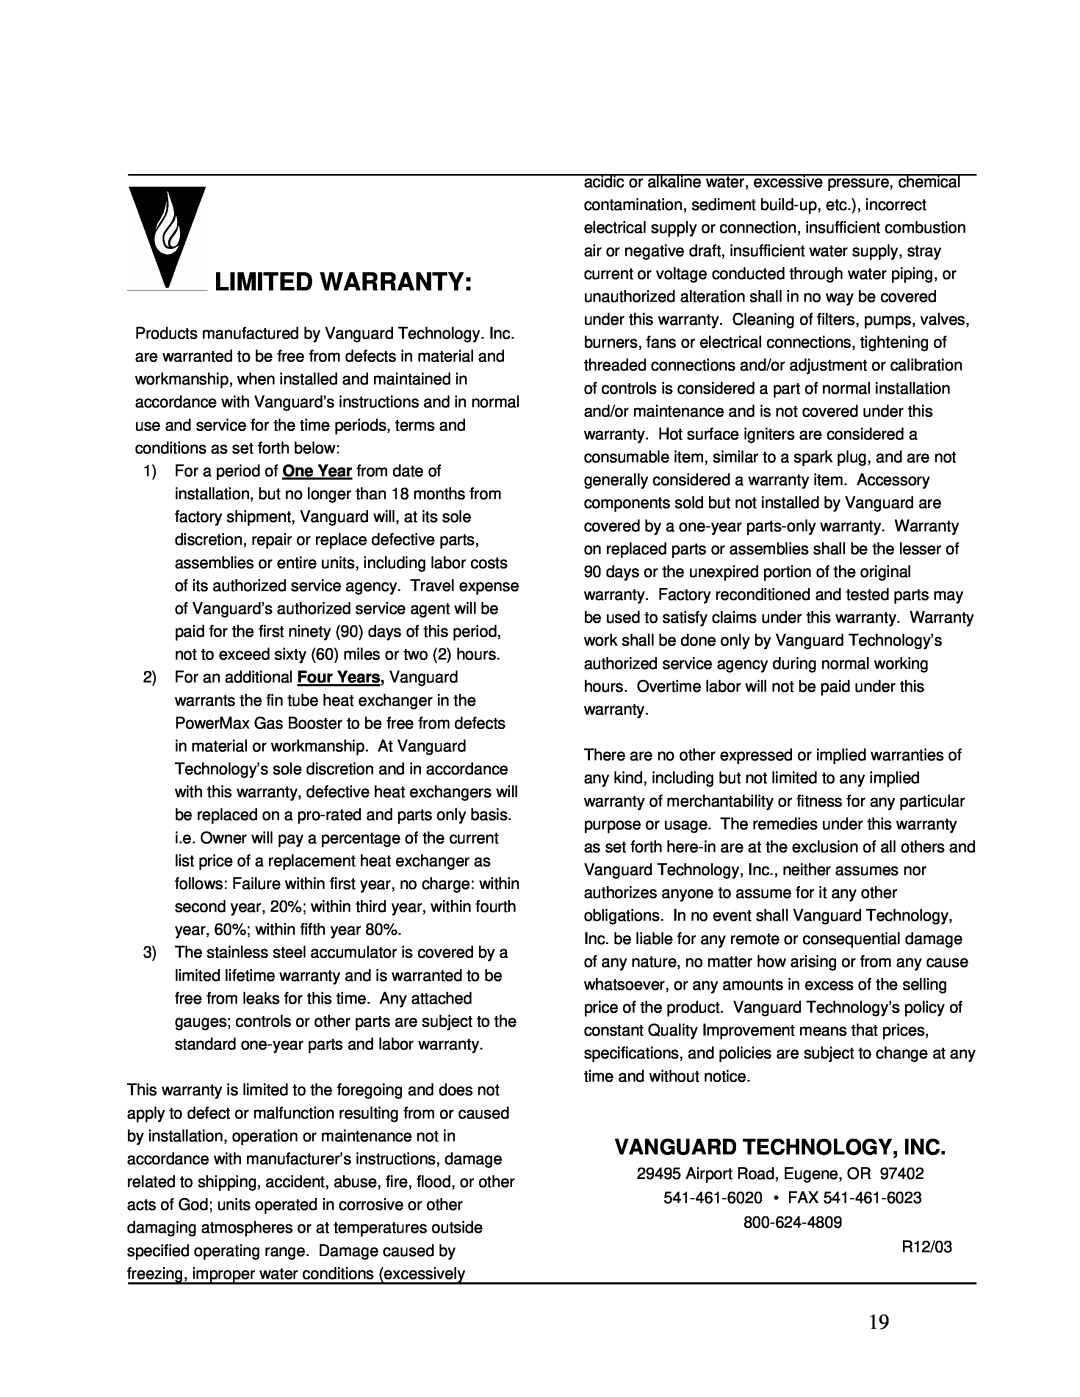 Vanguard Heating PM400, PM200 operation manual Limited Warranty, Vanguard Technology, Inc 